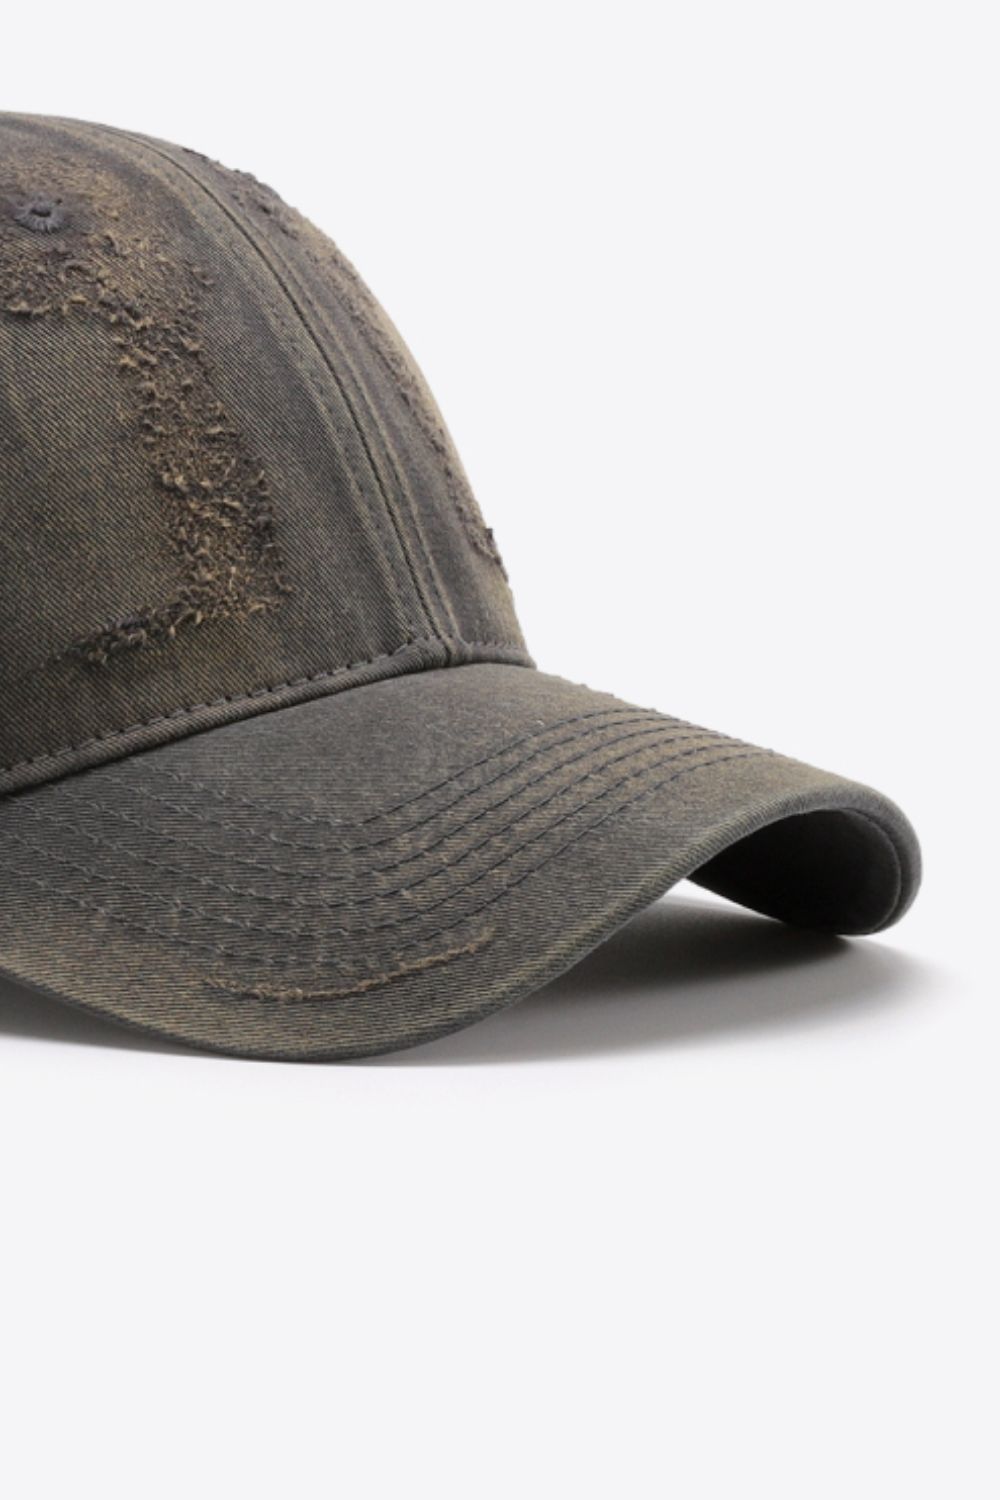 Distressed Adjustable Baseball Cap - Scarvesnthangs